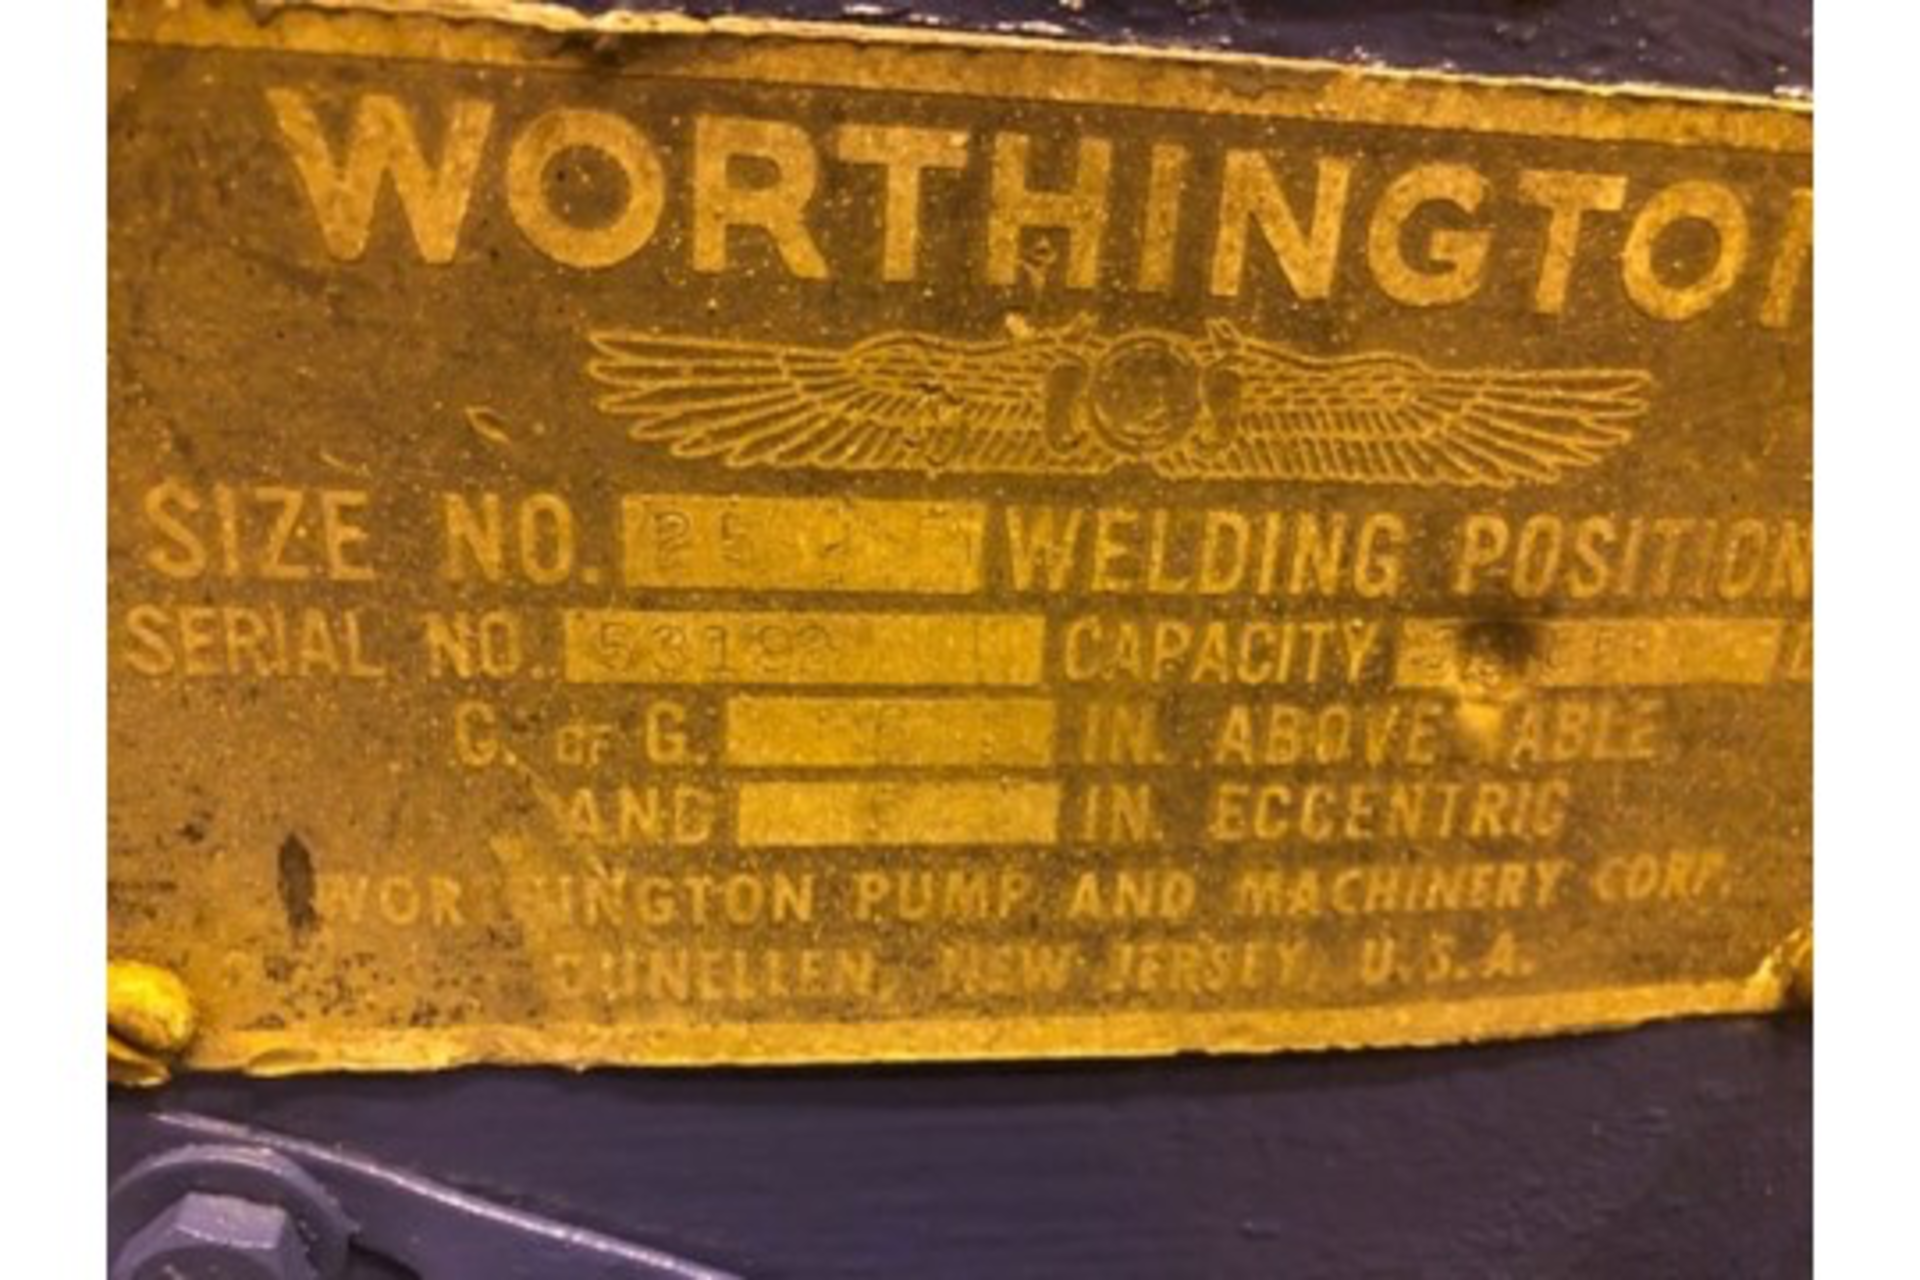 Worthington Welding Positioner - Image 5 of 5